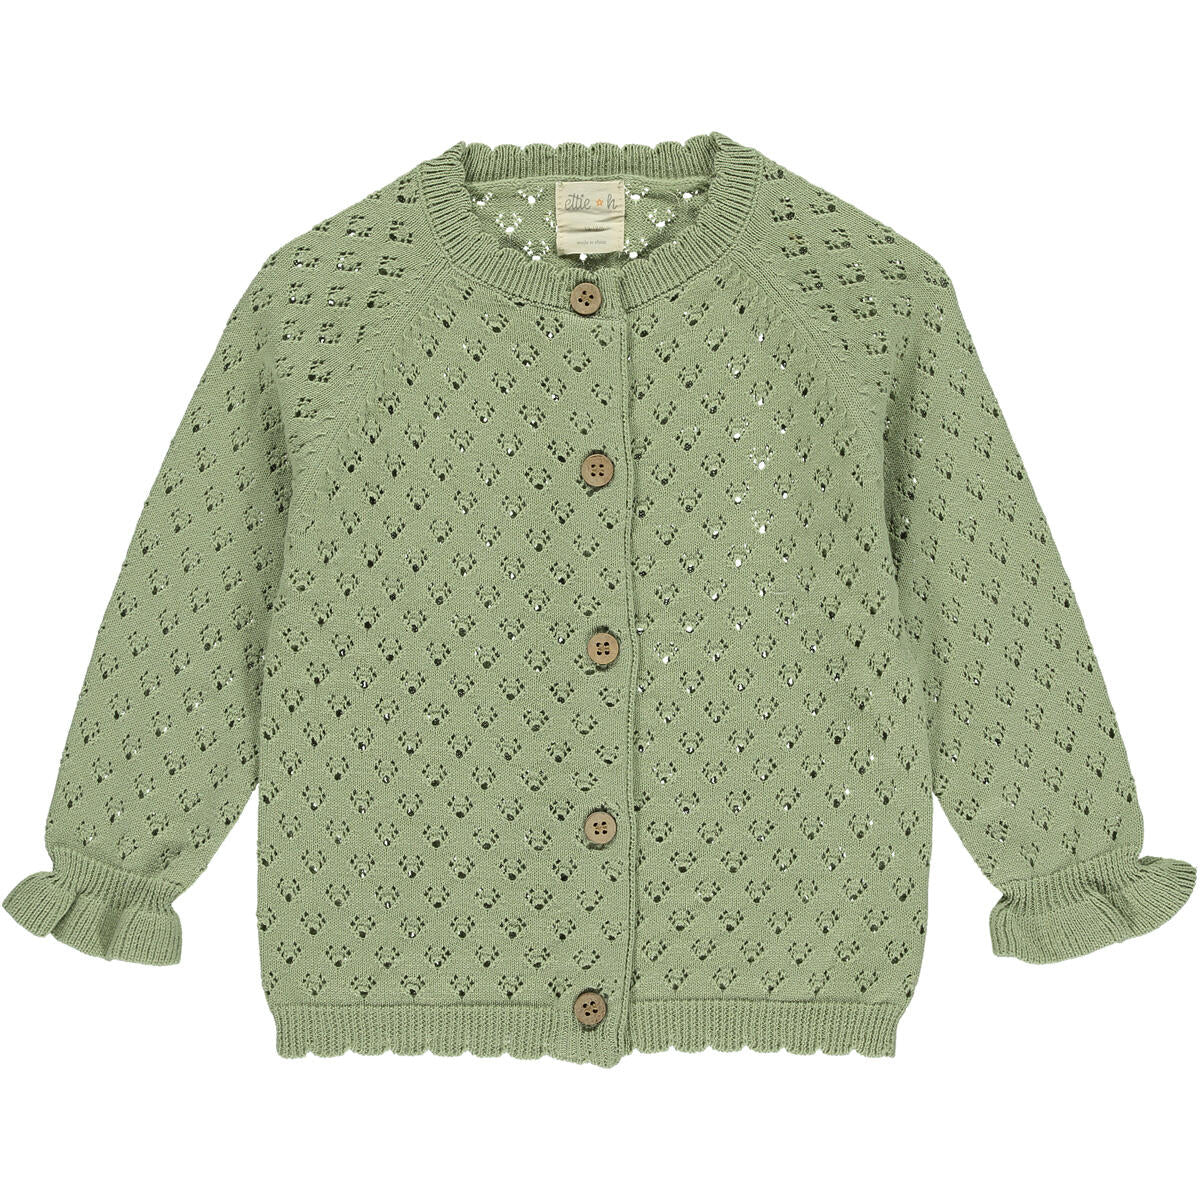 ettie and h sage aurora cardigan, green, lace, ruffle detail, dressy, sweater, cotton, oregano